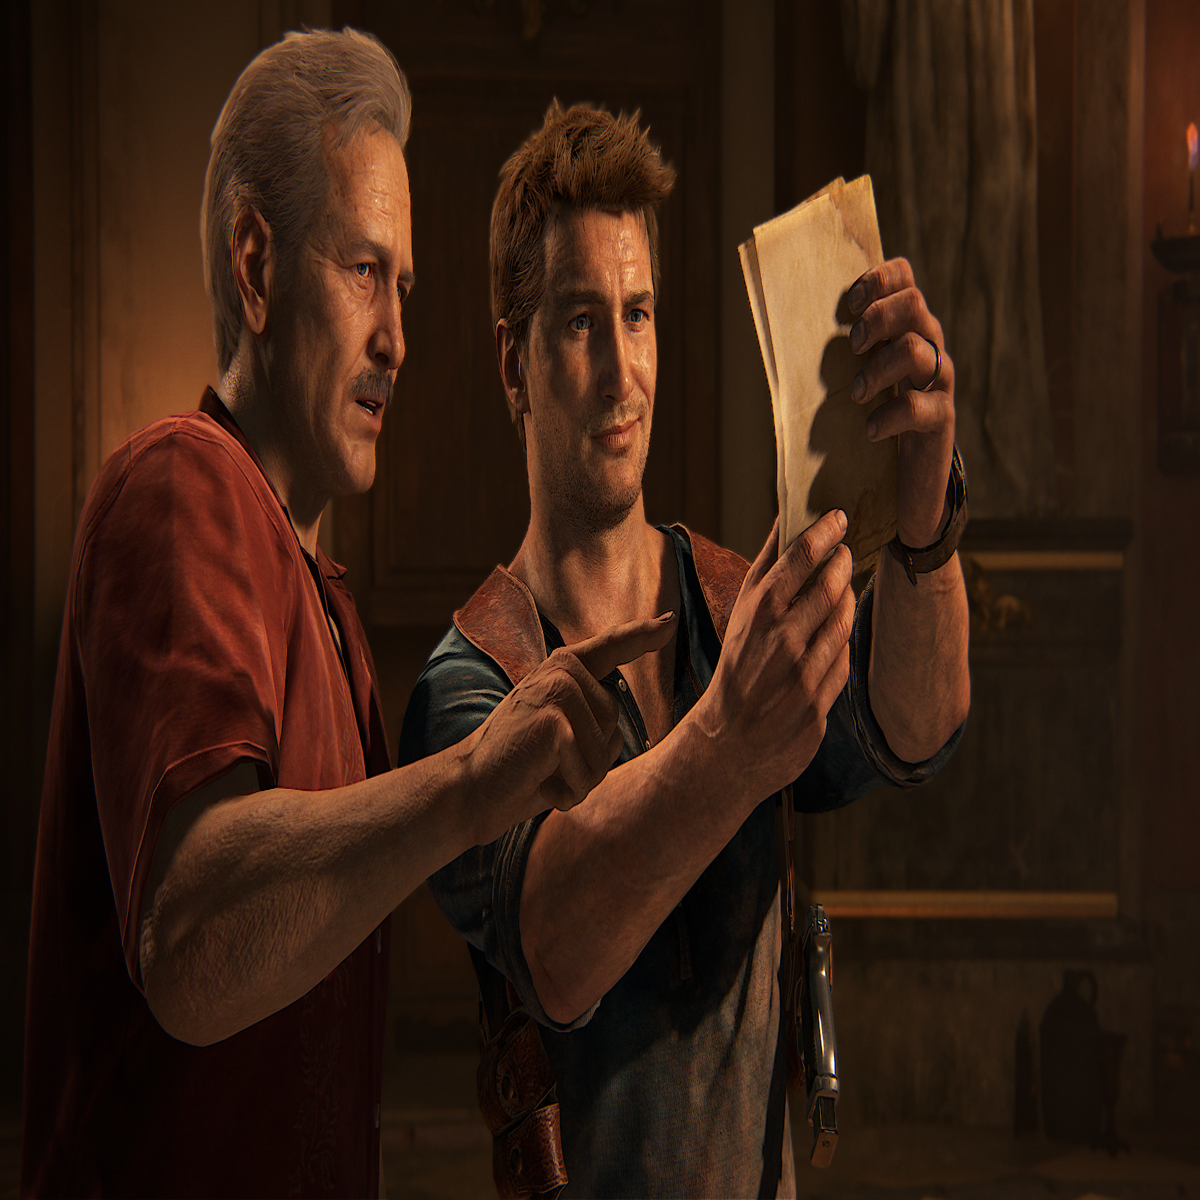 Revelada lista de capítulos de Uncharted 4: A Thief's End